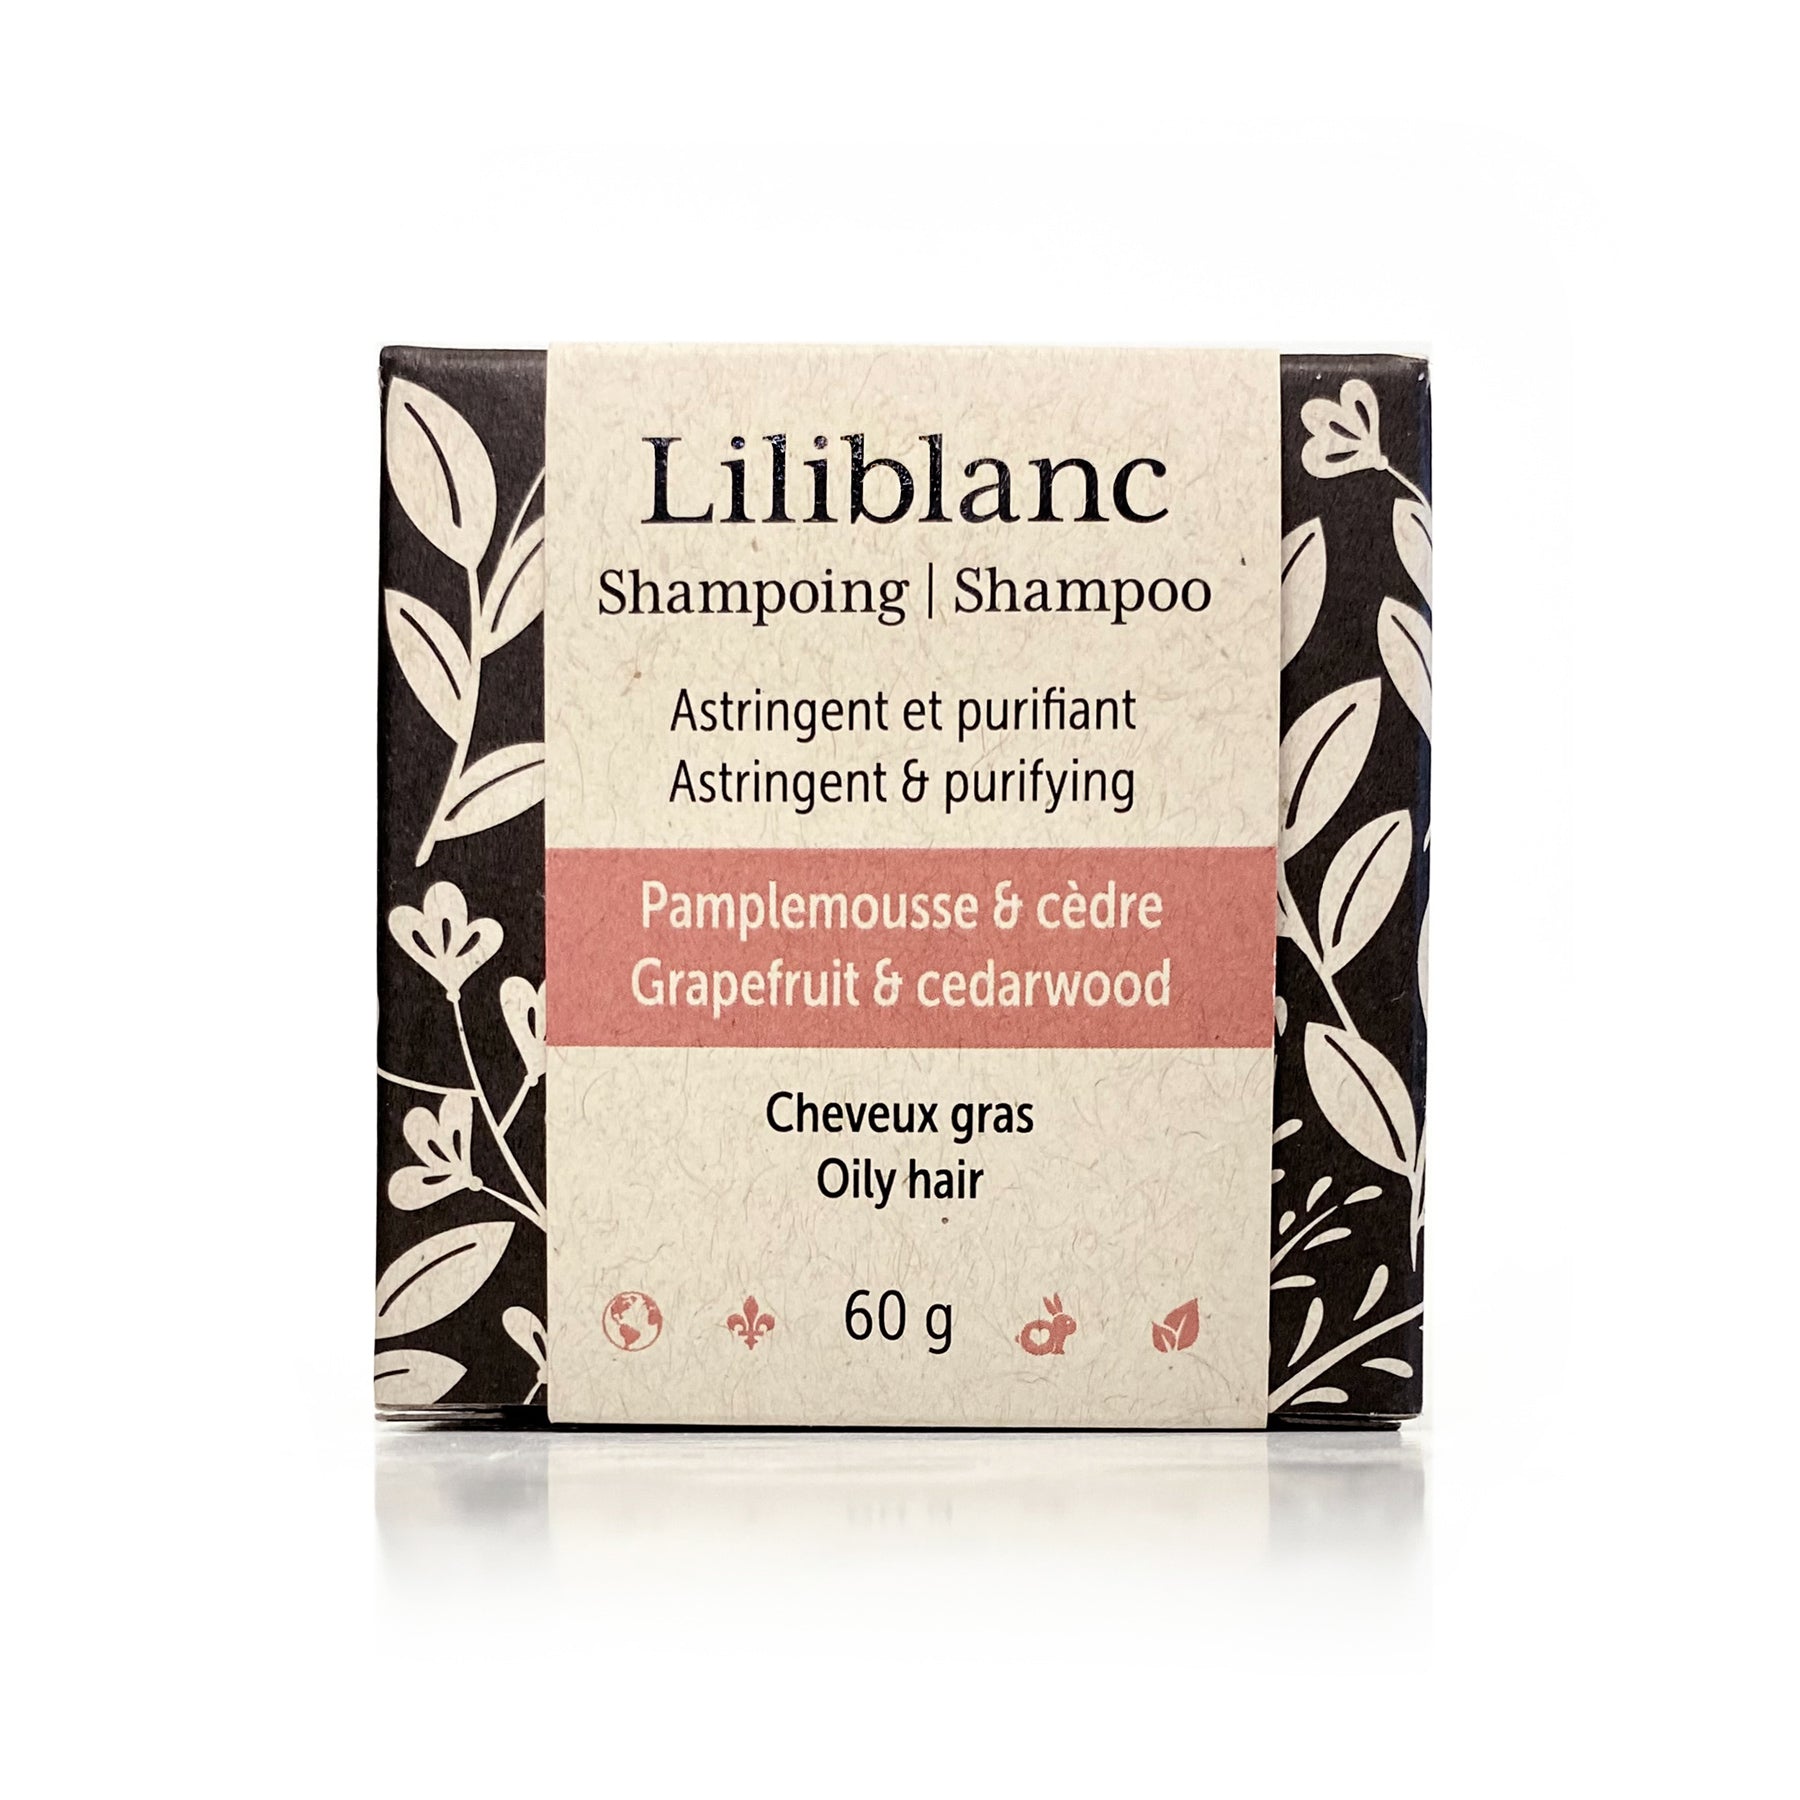 Shampoo bar - Oily hair - Grapefruit and Atlas cedar